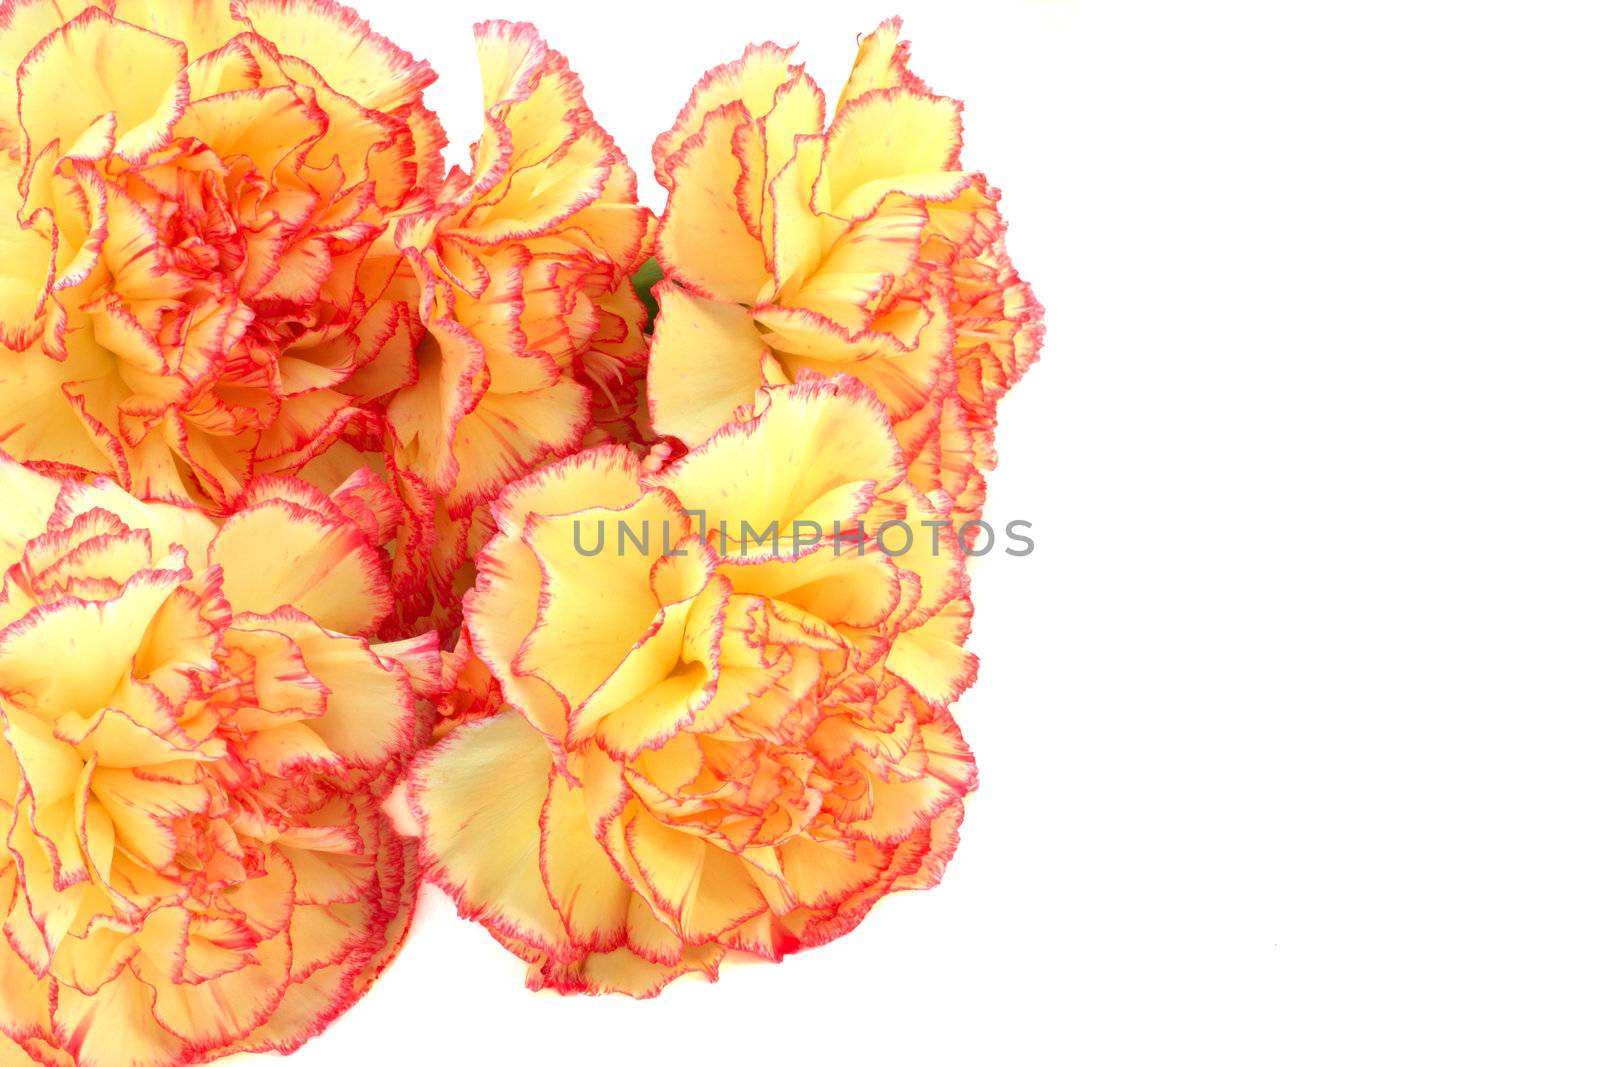 Multicolored carnations by destillat